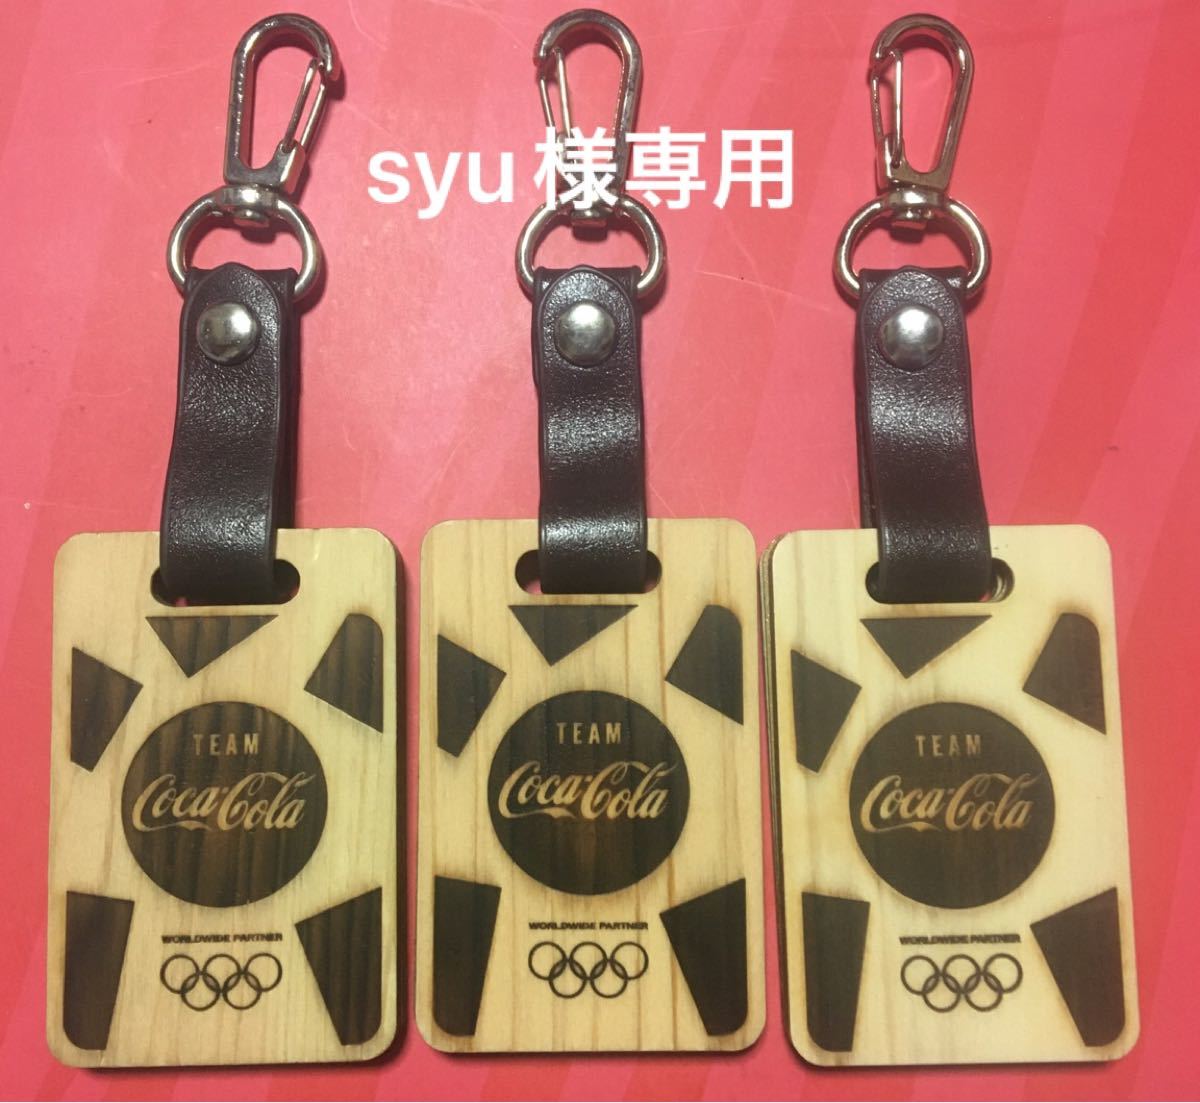 syu様専用です。東京2020大会 オリンピック選手使用キーホルダー 3点　非売品 磁気埋込み 素材ヒノキ